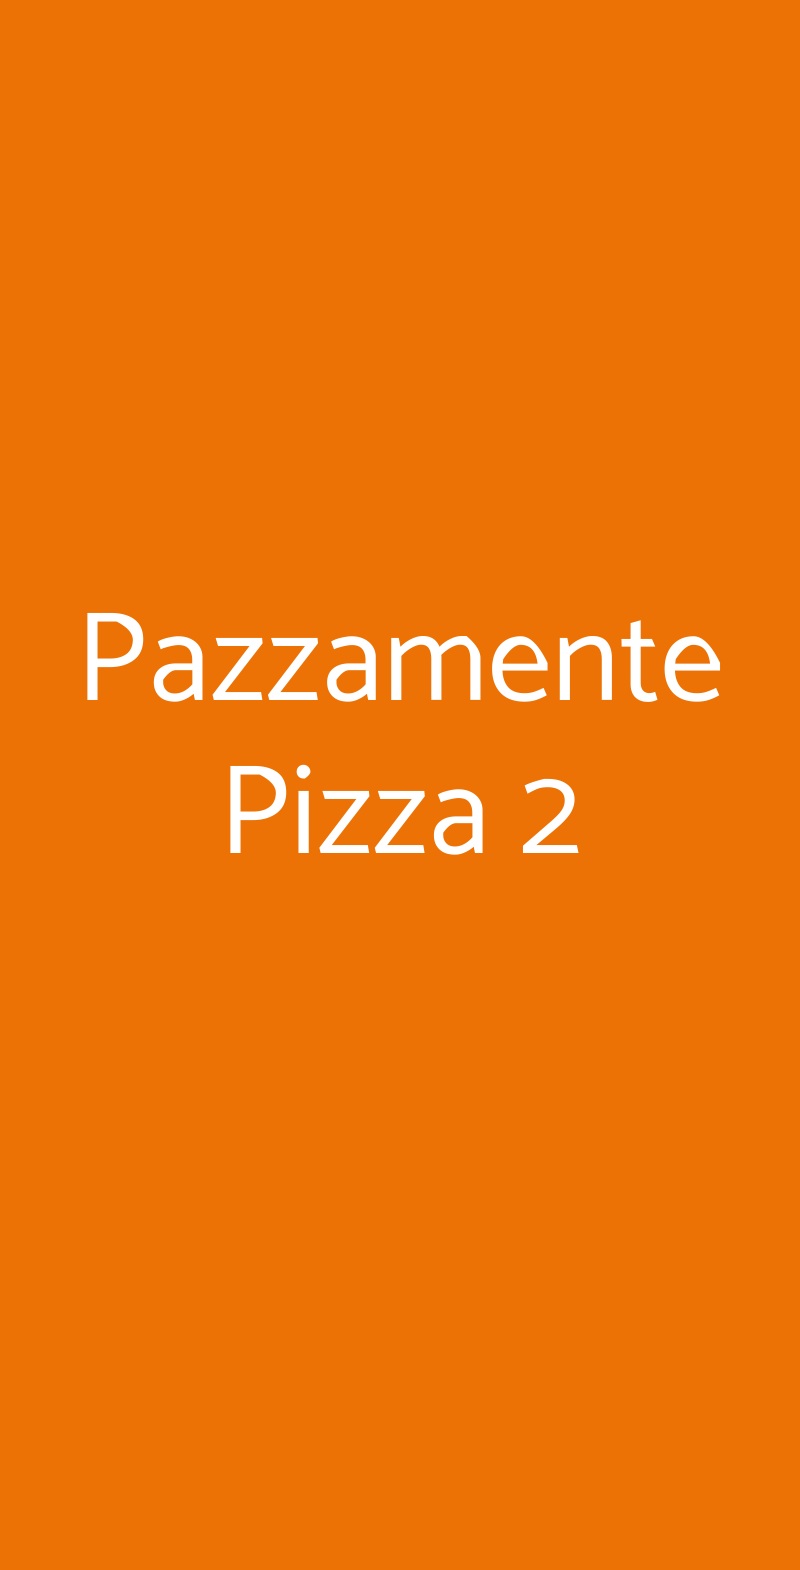 Pazzamente Pizza 2 Roma menù 1 pagina